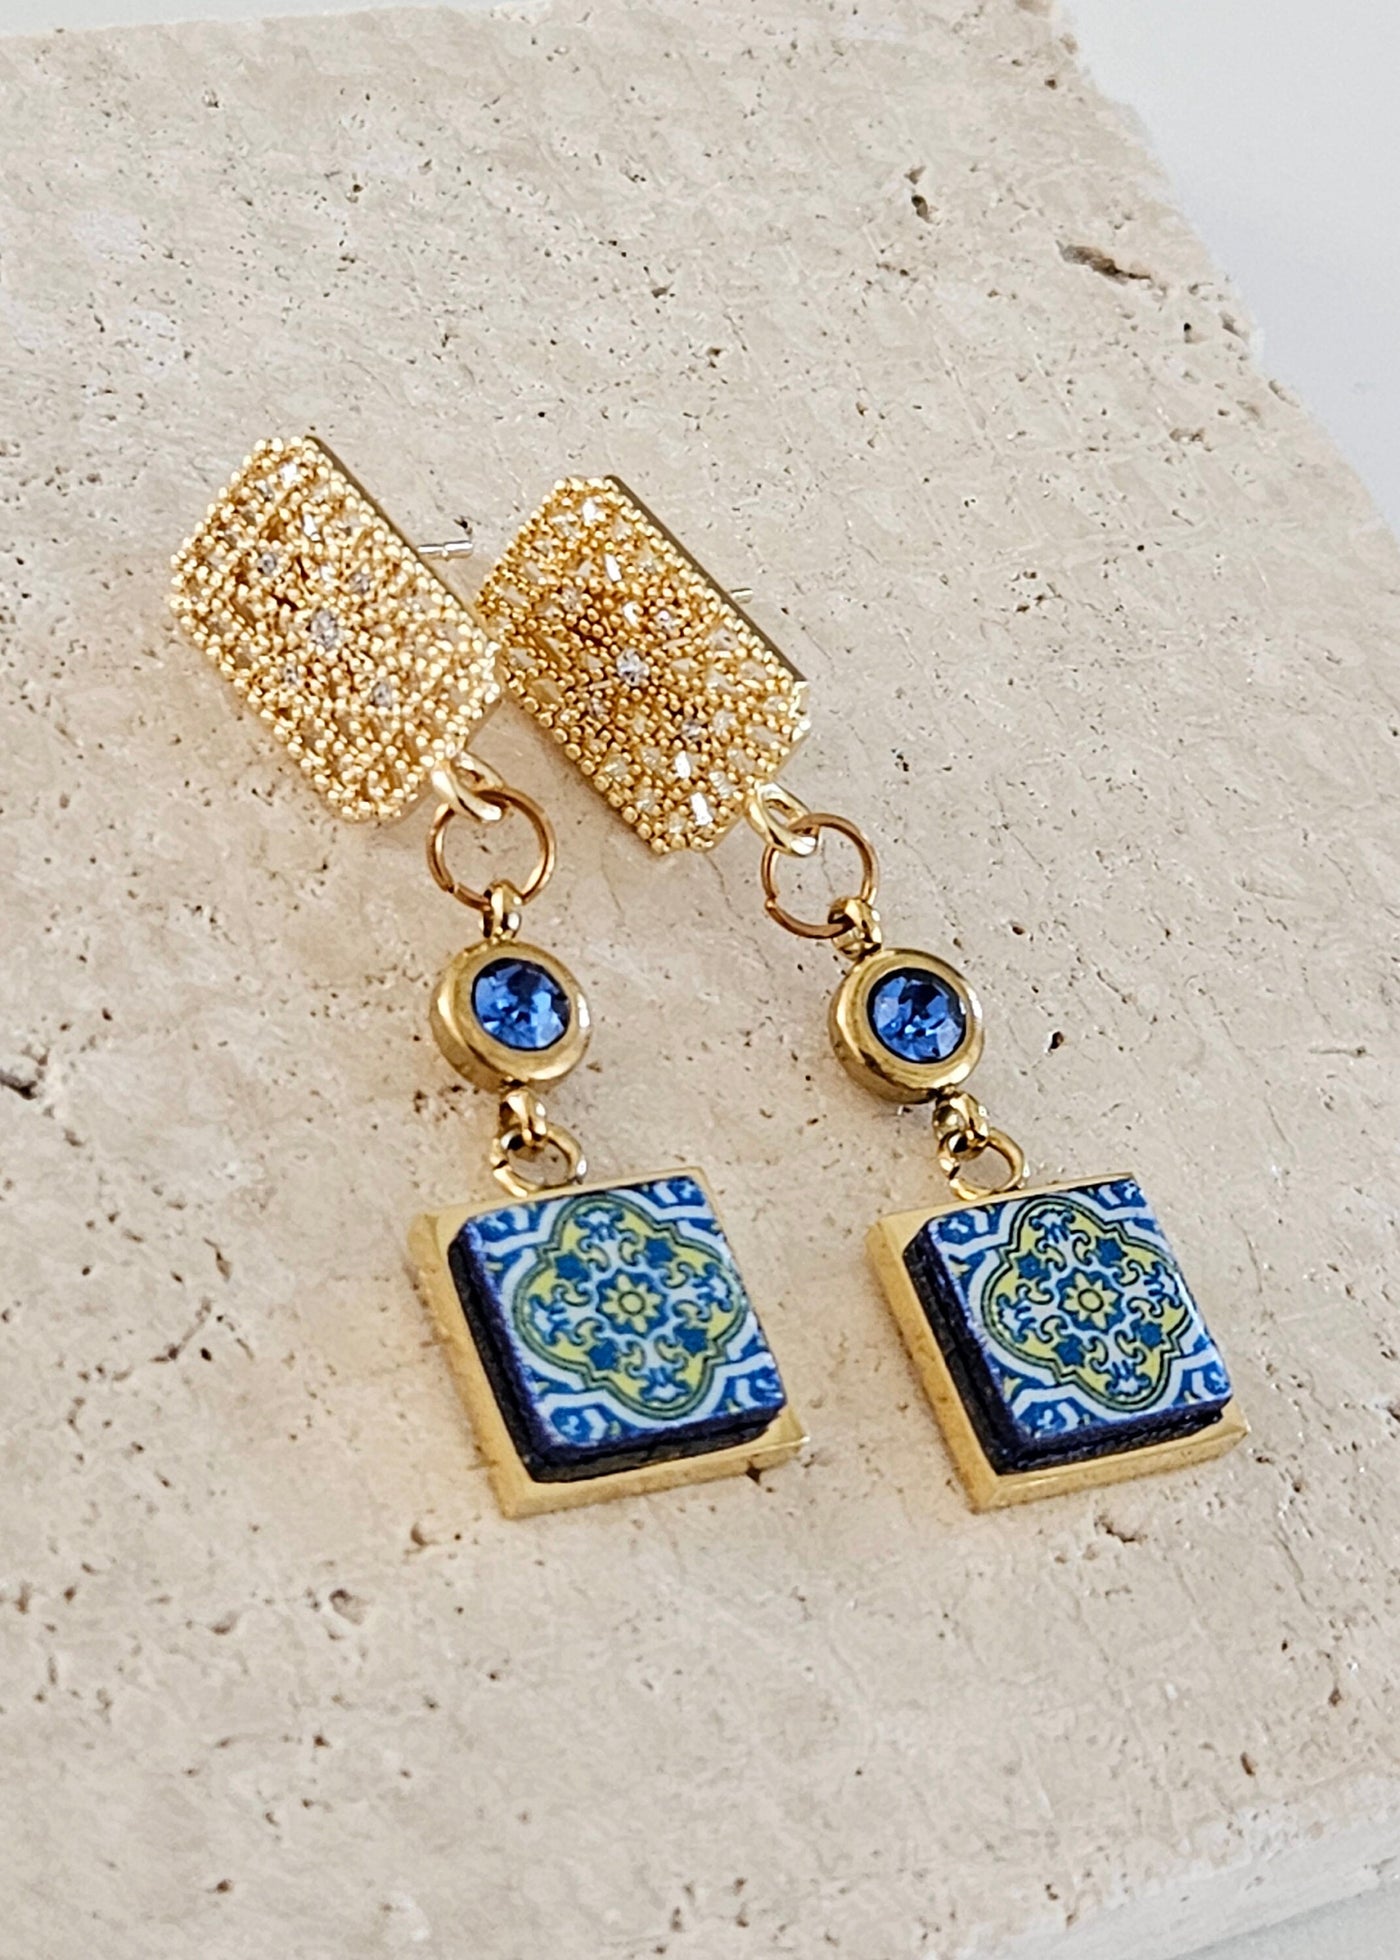 Portugal Tile Earrings Dainty Elegant Azulejo Earrings Historical Jewelry Portuguese Tiles Bridal Mom Gift Vacation Travel Earrings Tile